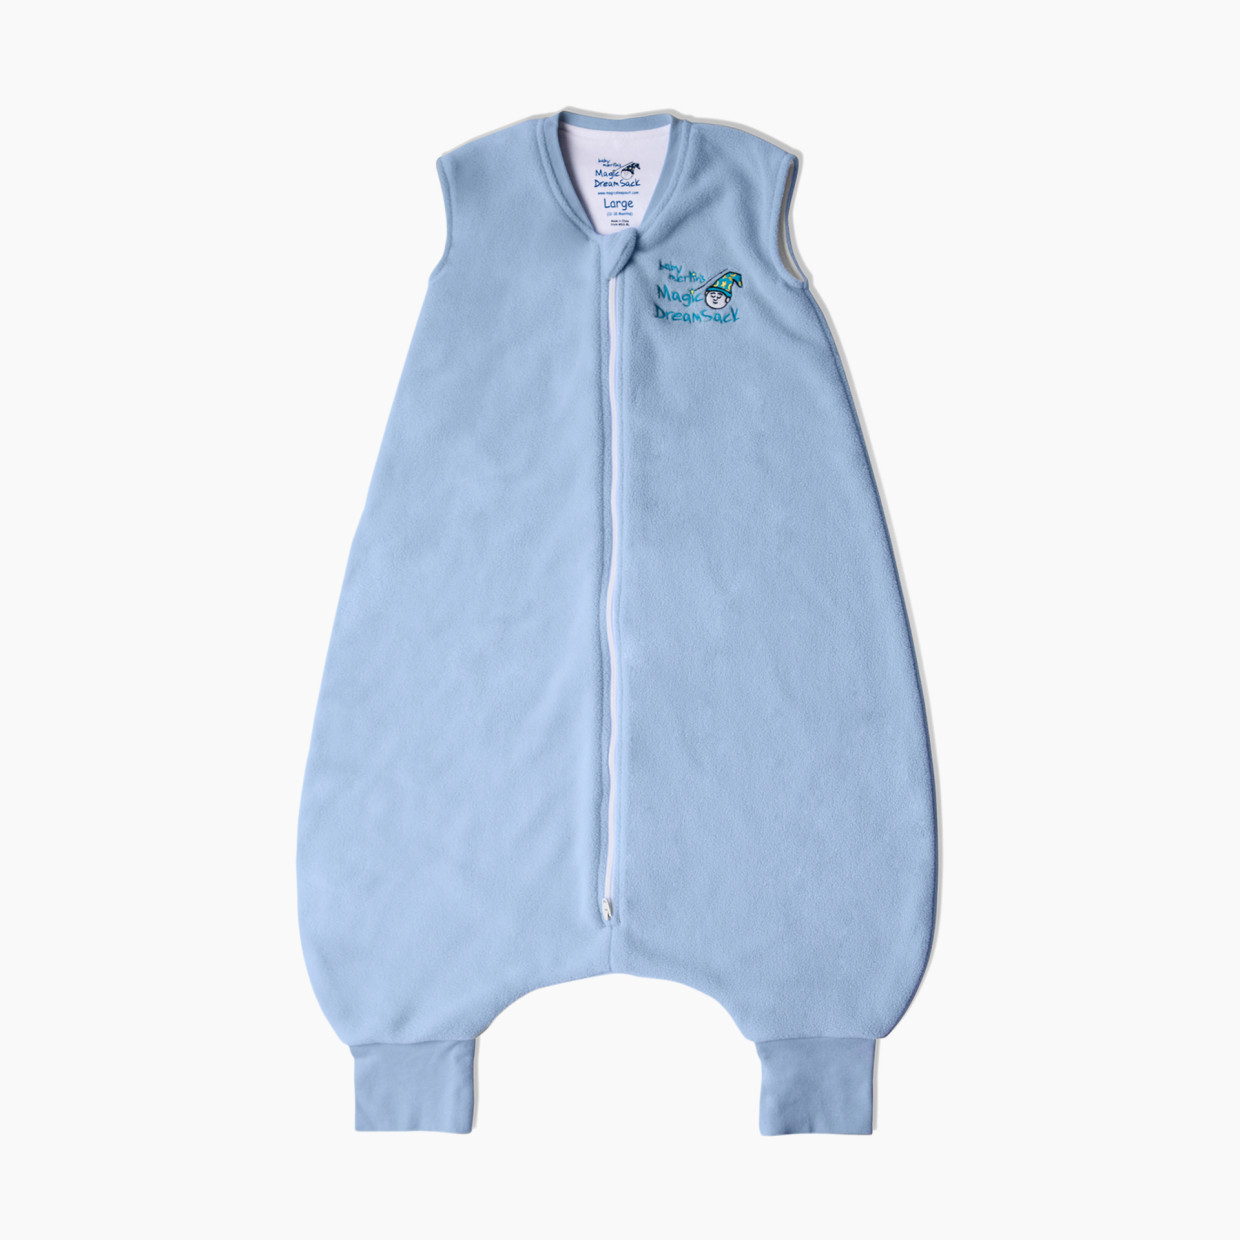 Baby Merlin's Magic Sleepsuit Cotton Dream Sack Walker - Blue, 12-18 Months.